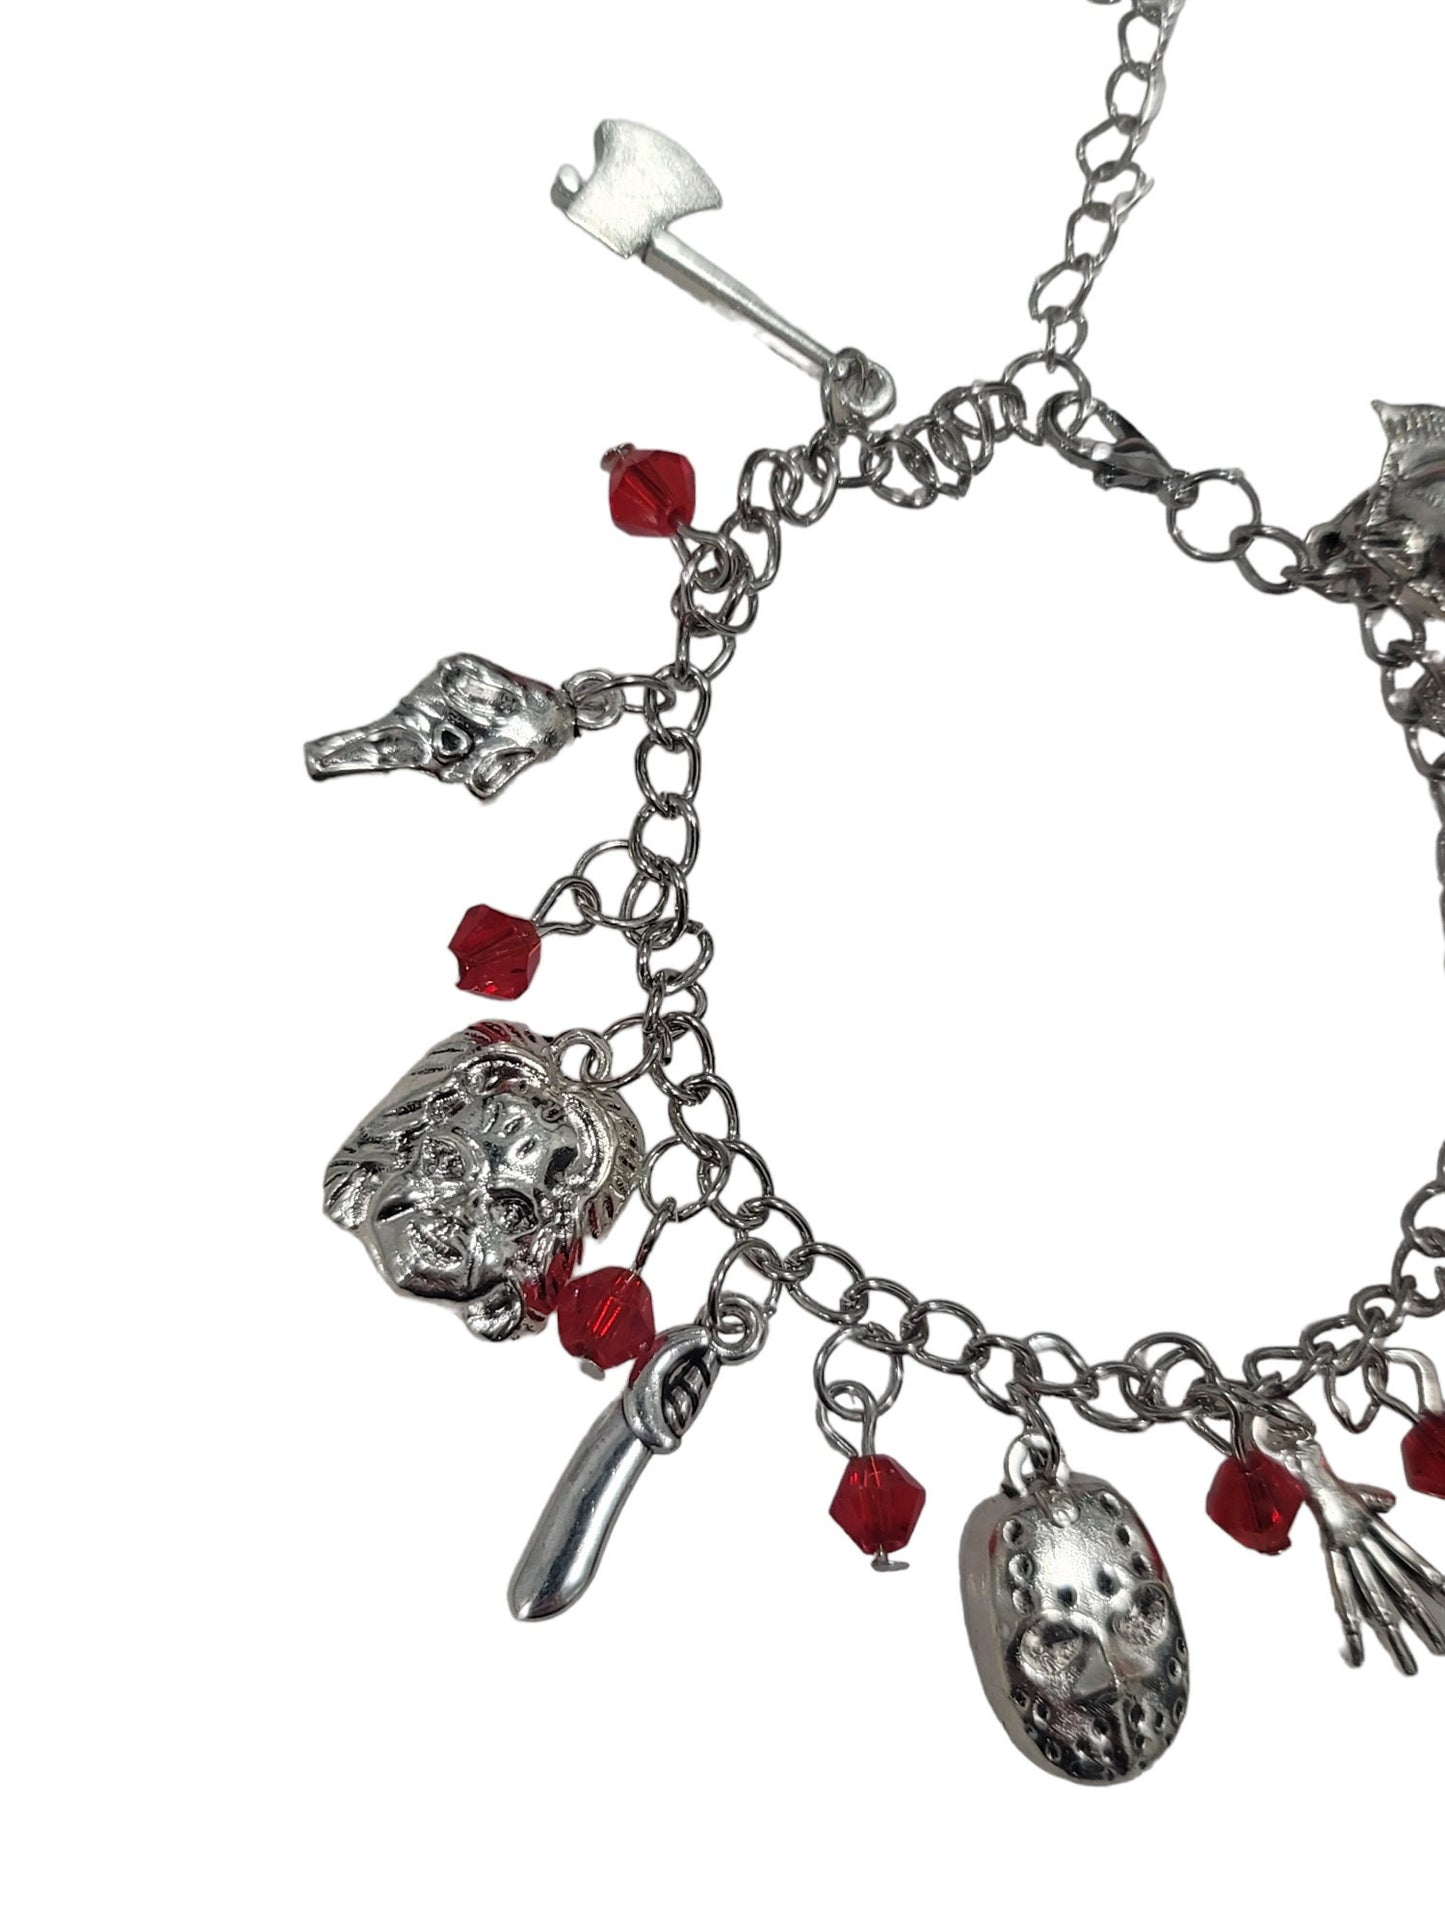 Horror charm bracelet Freddy Michael Jason Chucky and more red beads silver charm bracelet